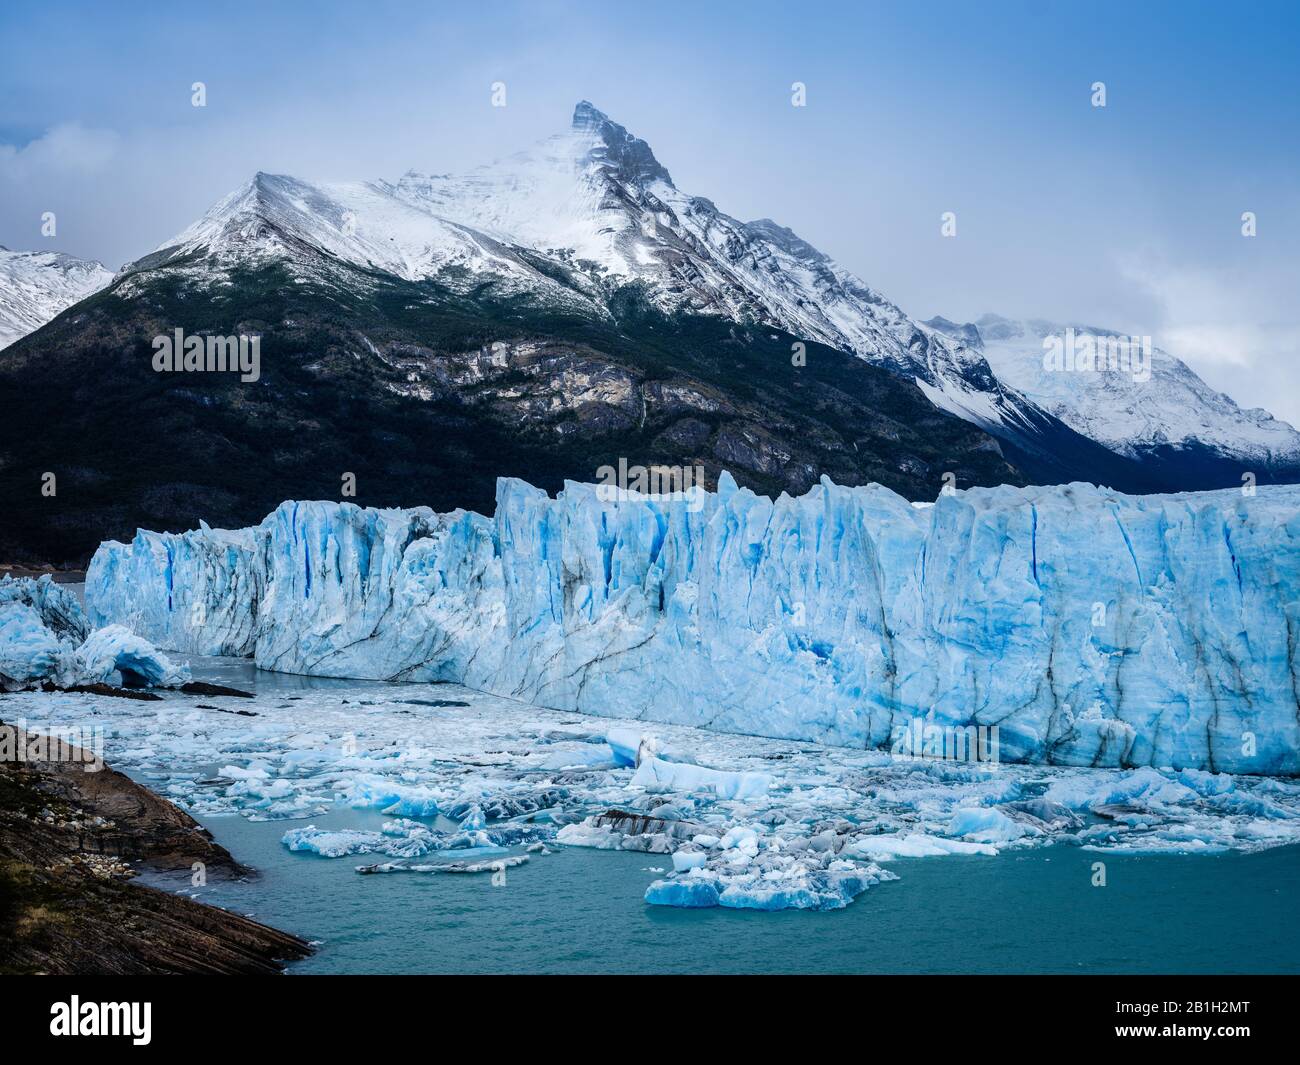 NATIONAL PARK LOS GLACIARES, ARGENTINA - CIRCA FEBRUARY 2019: View of the Glacier Perito Moreno, a famous landmark within the Los Glaciares National P Stock Photo